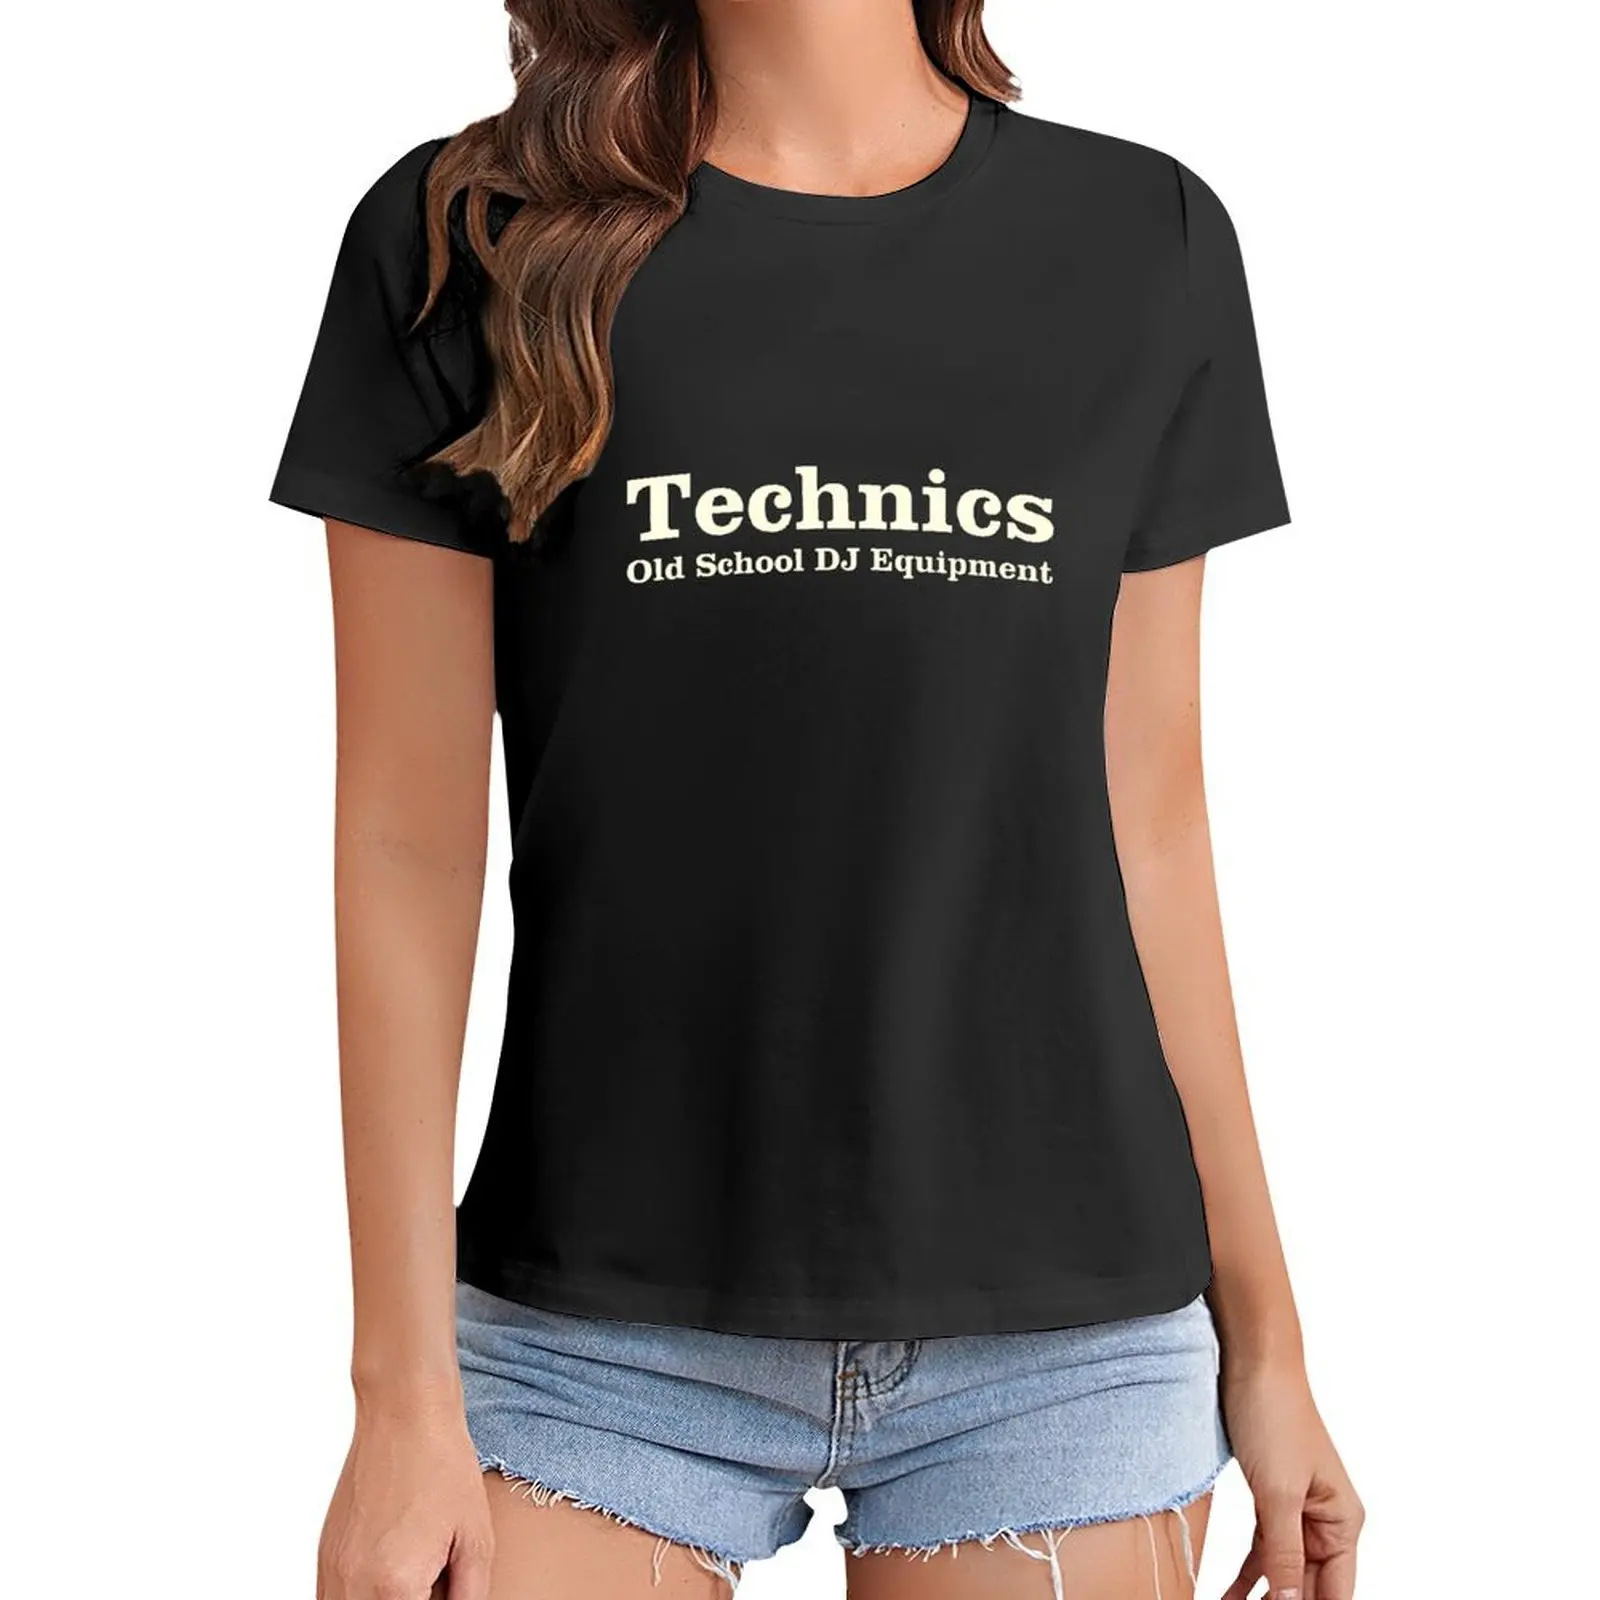 

Technics Old School T-Shirt animal prinfor hippie clothes plus size tops blacks tops for Women